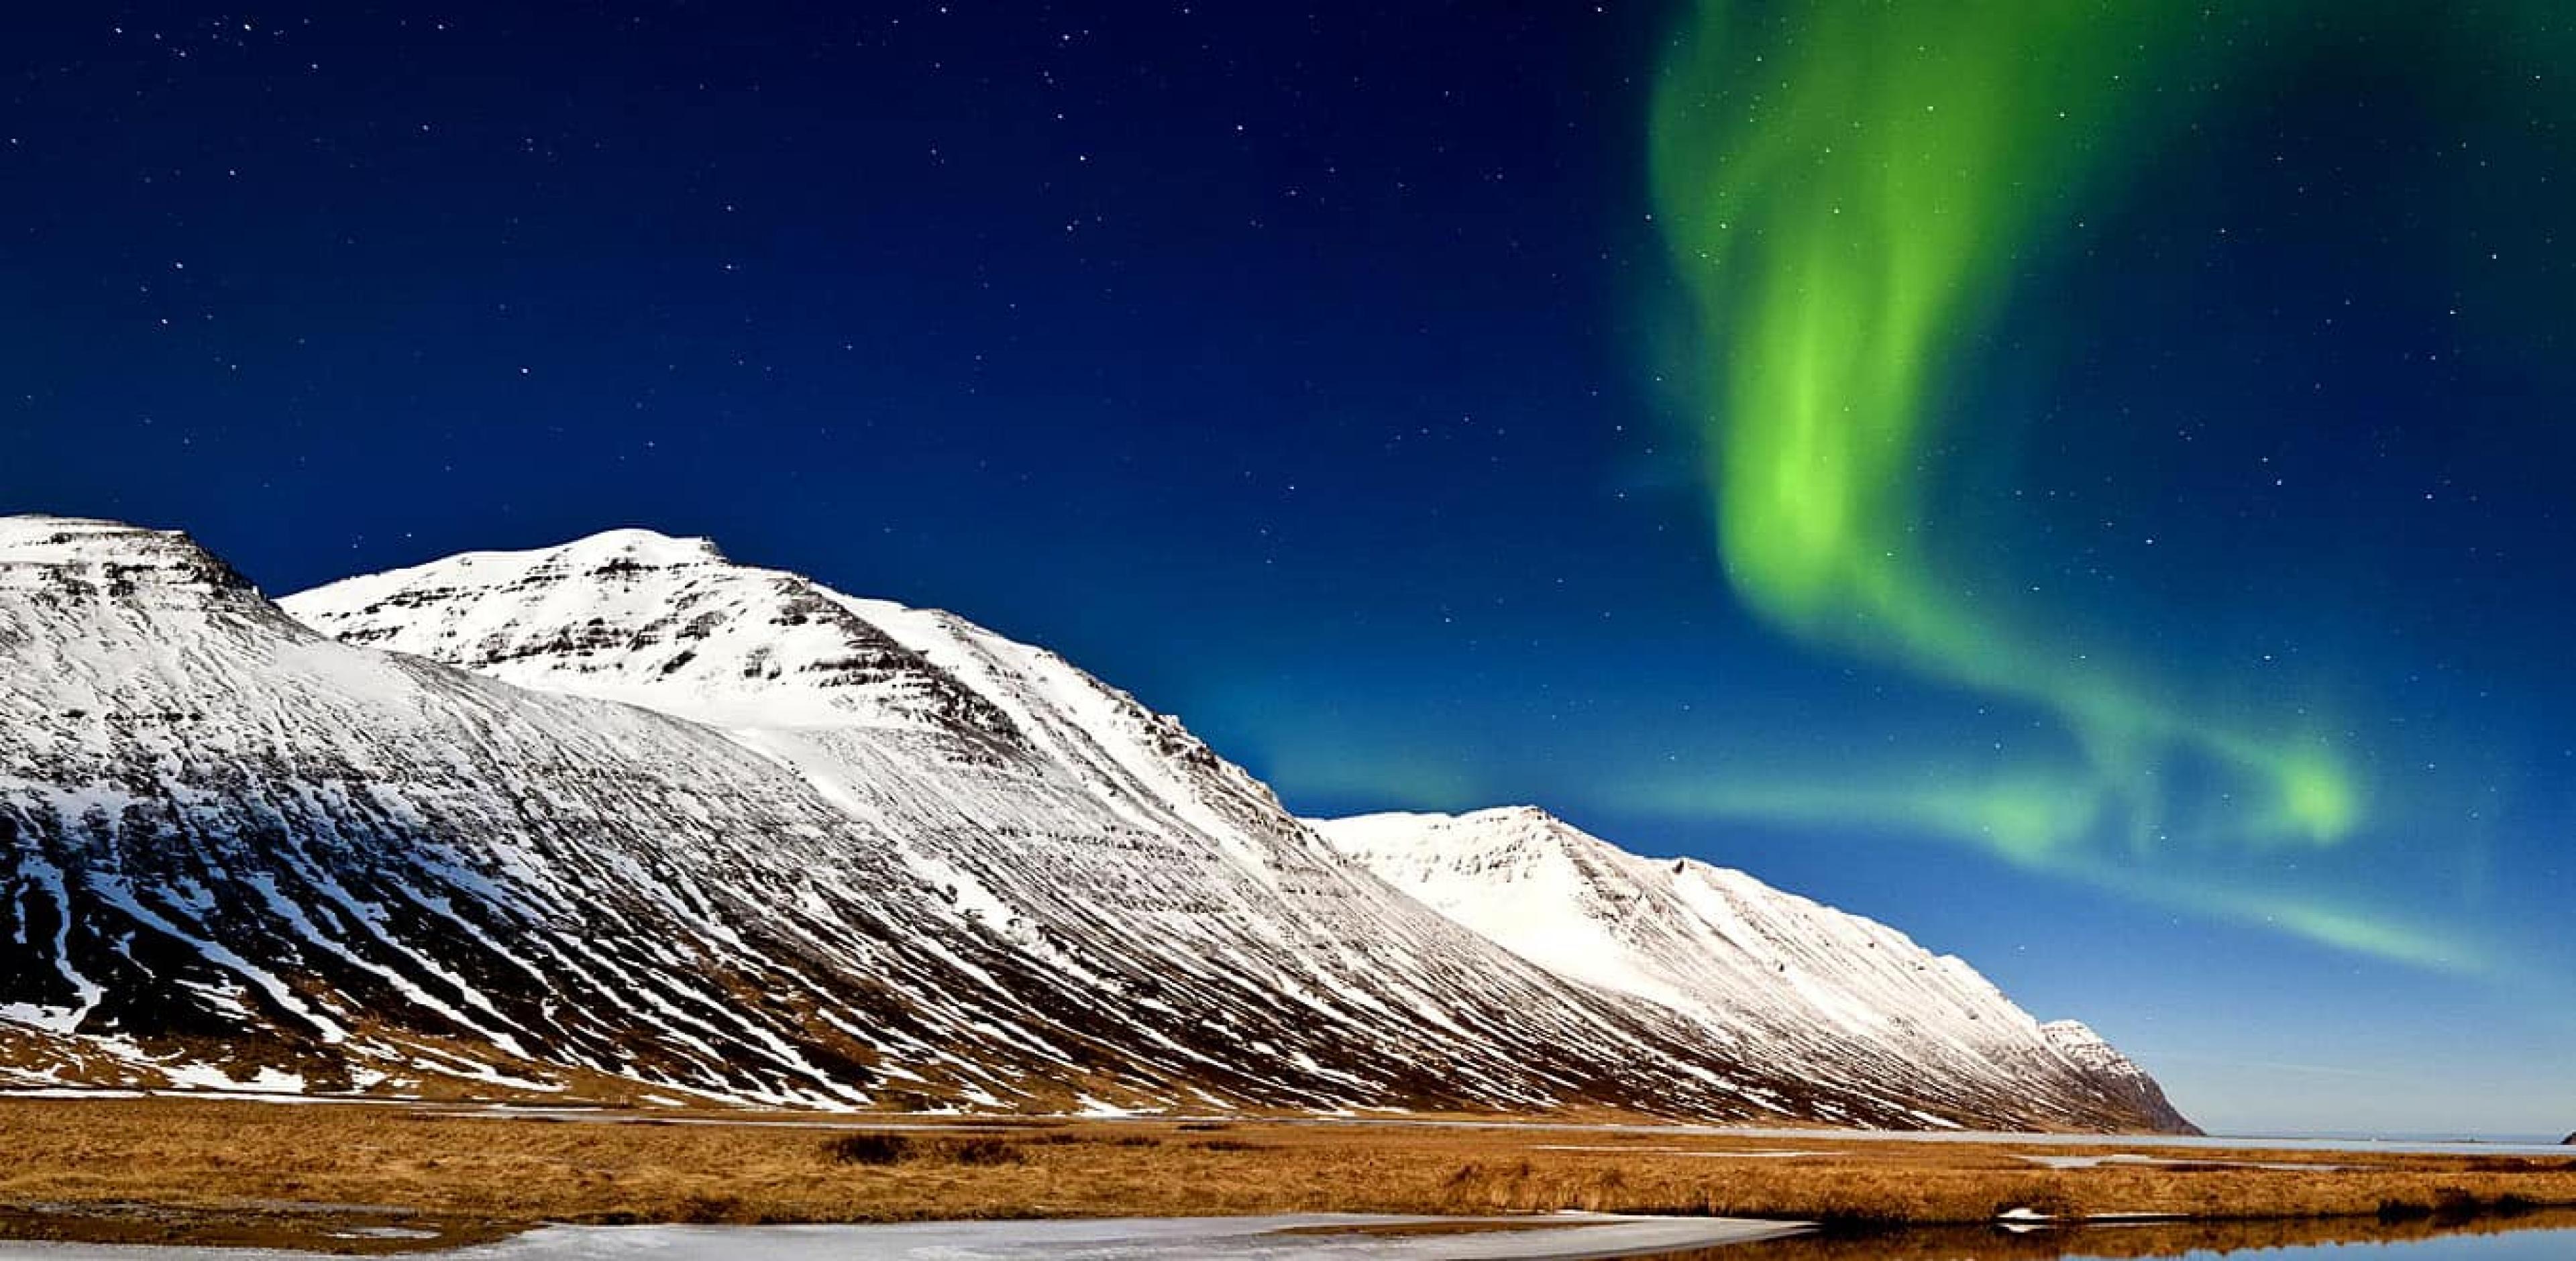 Aurora Borealis over snowy mountain in Iceland